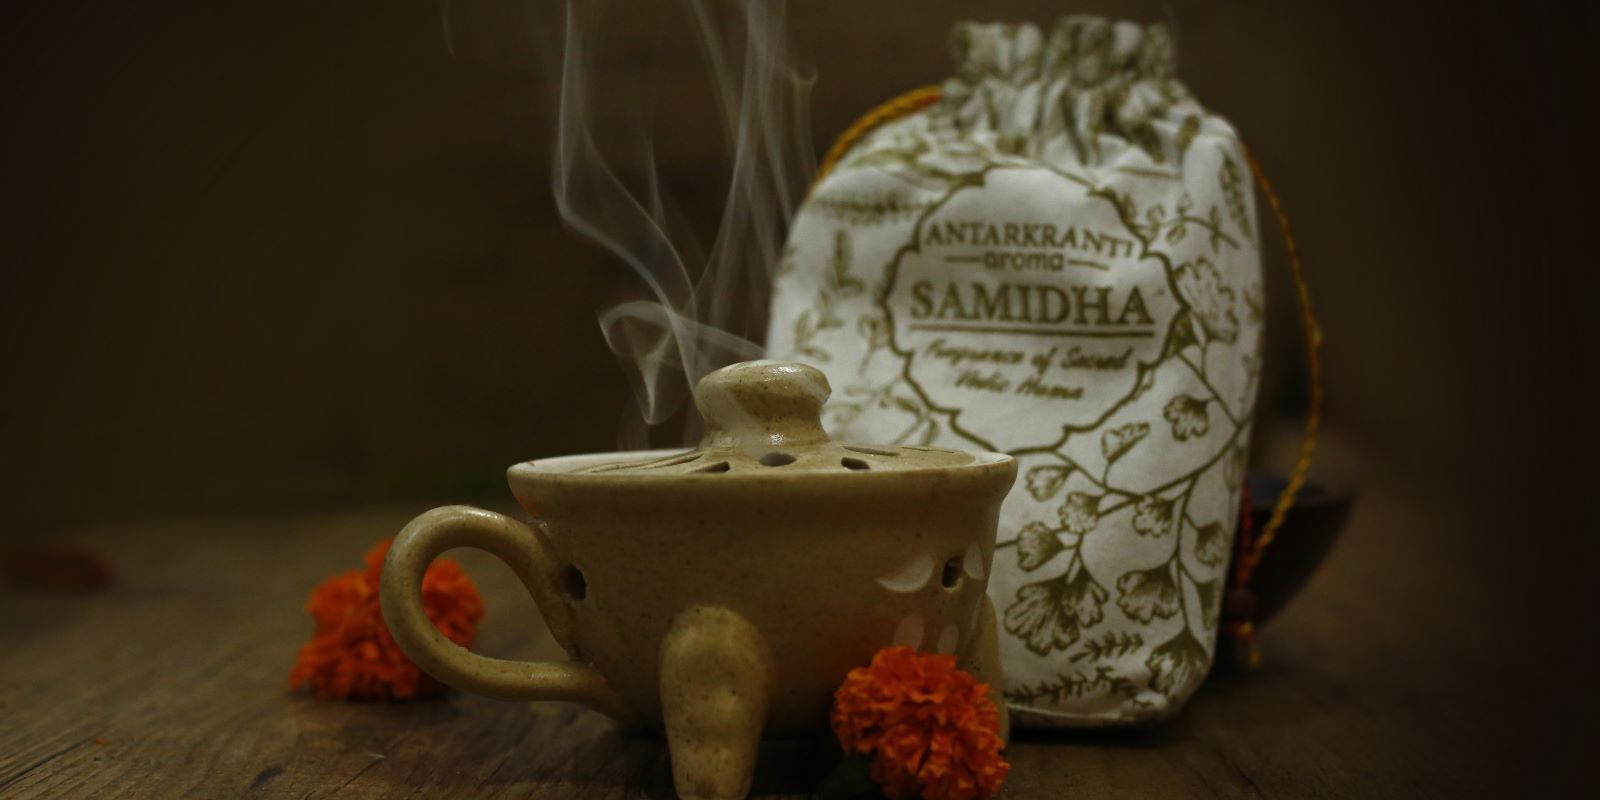 Samidha- The Fragrance of Vedic Havan